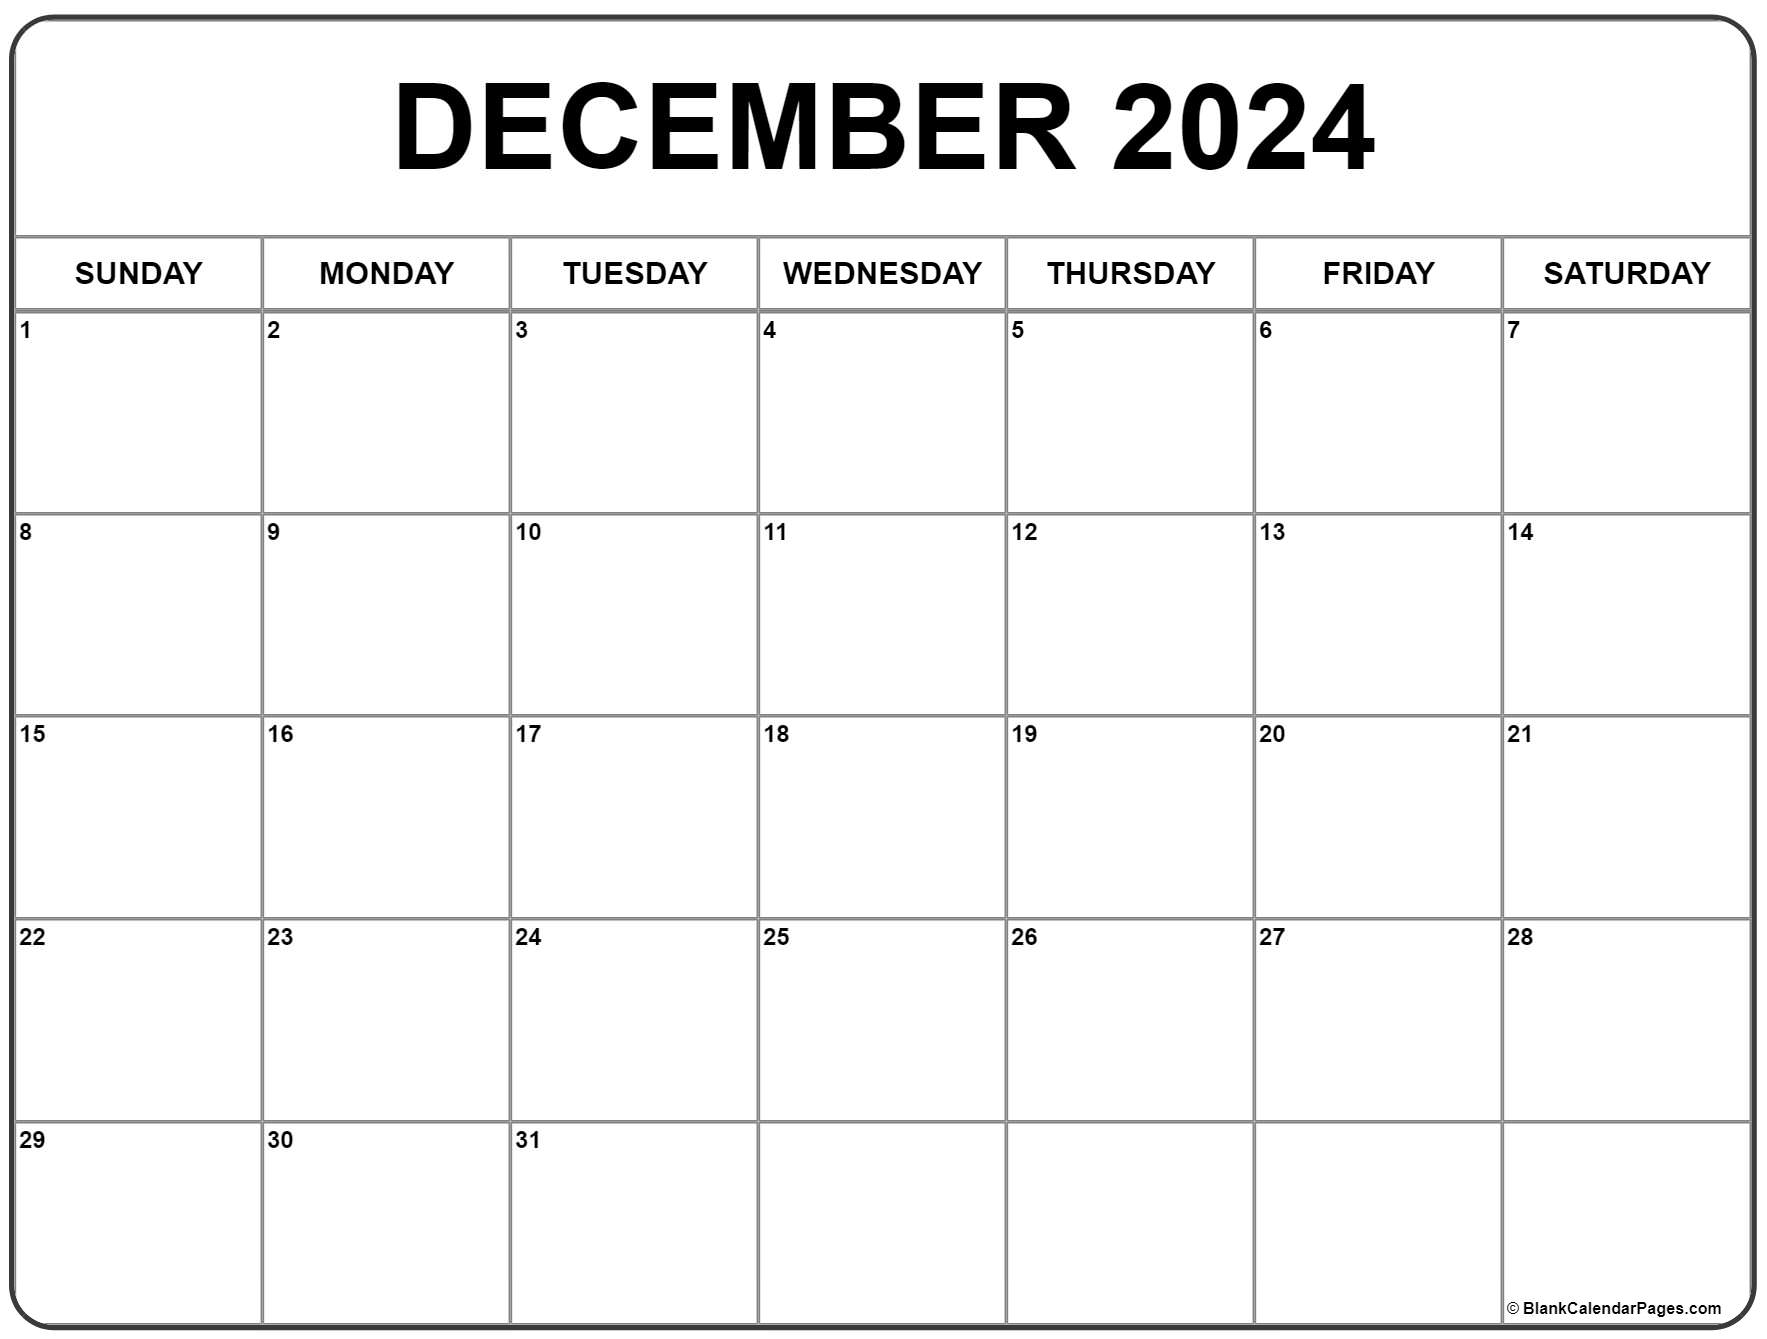 Print Dec 2022 Calendar December 2022 Calendar | Free Printable Calendar Templates